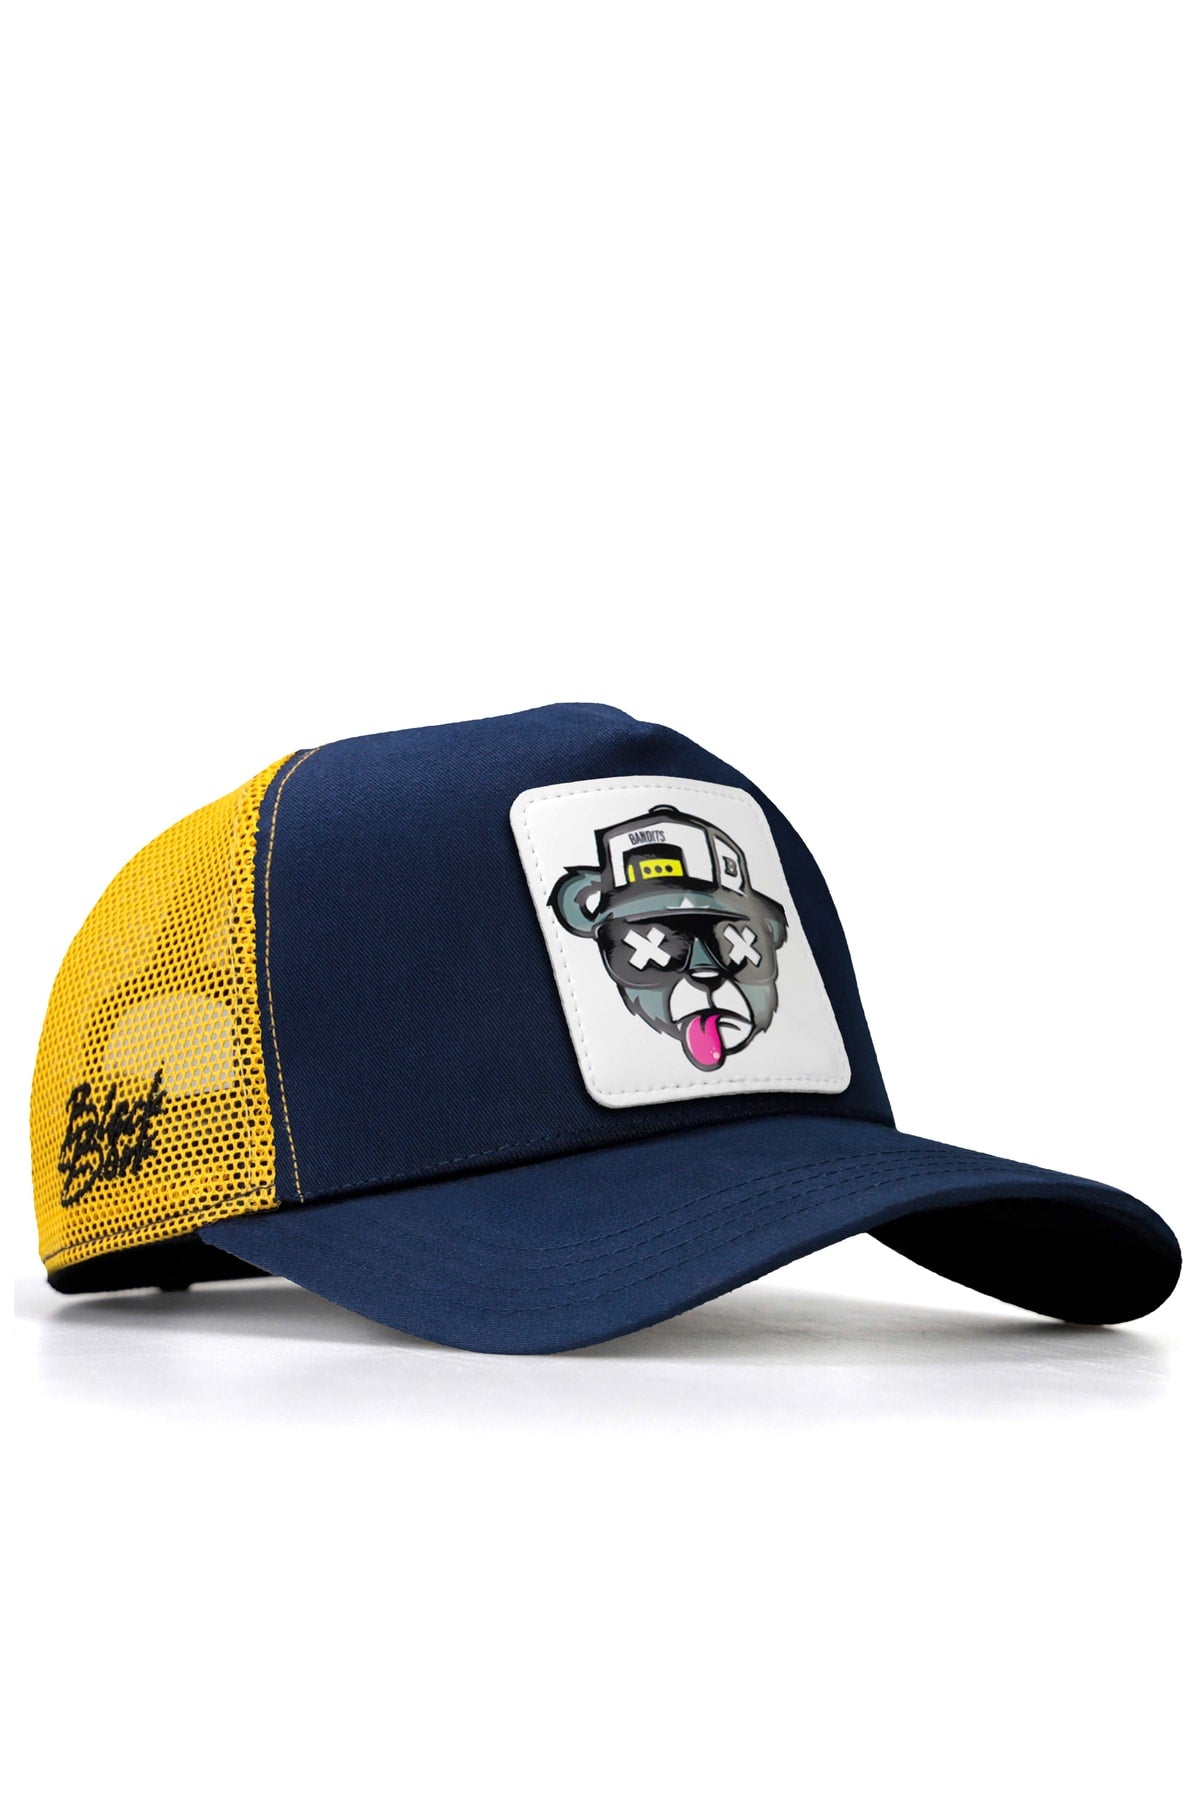 V1 Trucker Bear - Unisex Navy Blue-Yellow Hat with 15 Code Logo (Cap)